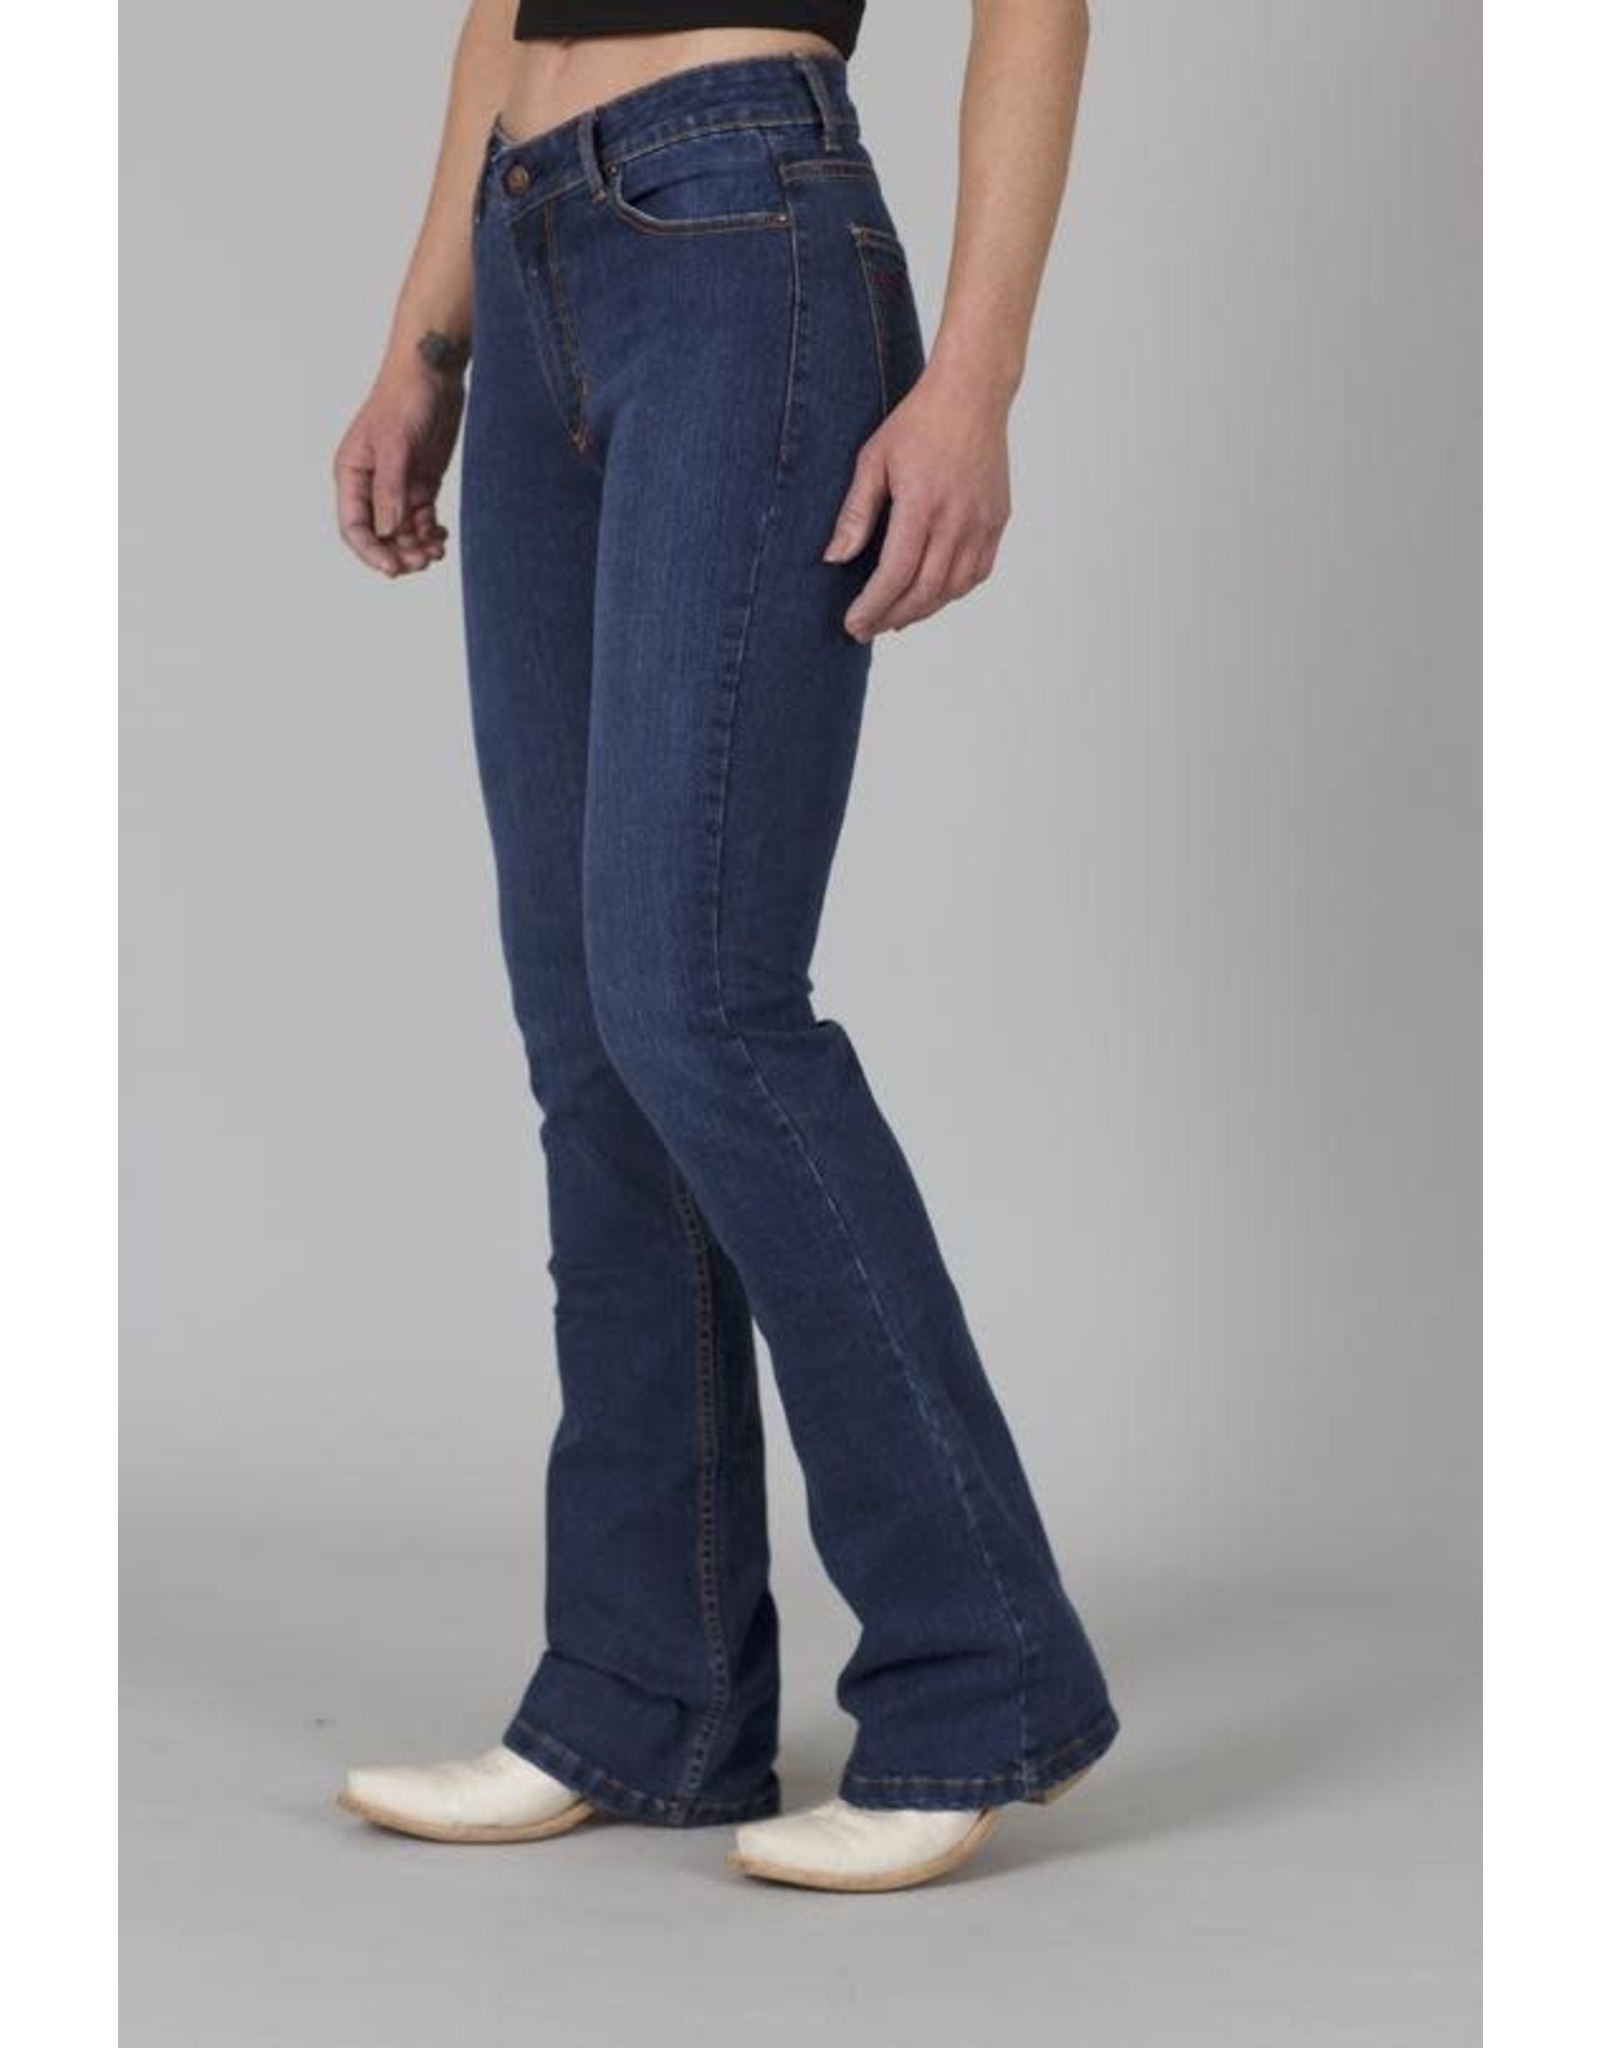 Kimes Ranch Chloe Blue Jeans